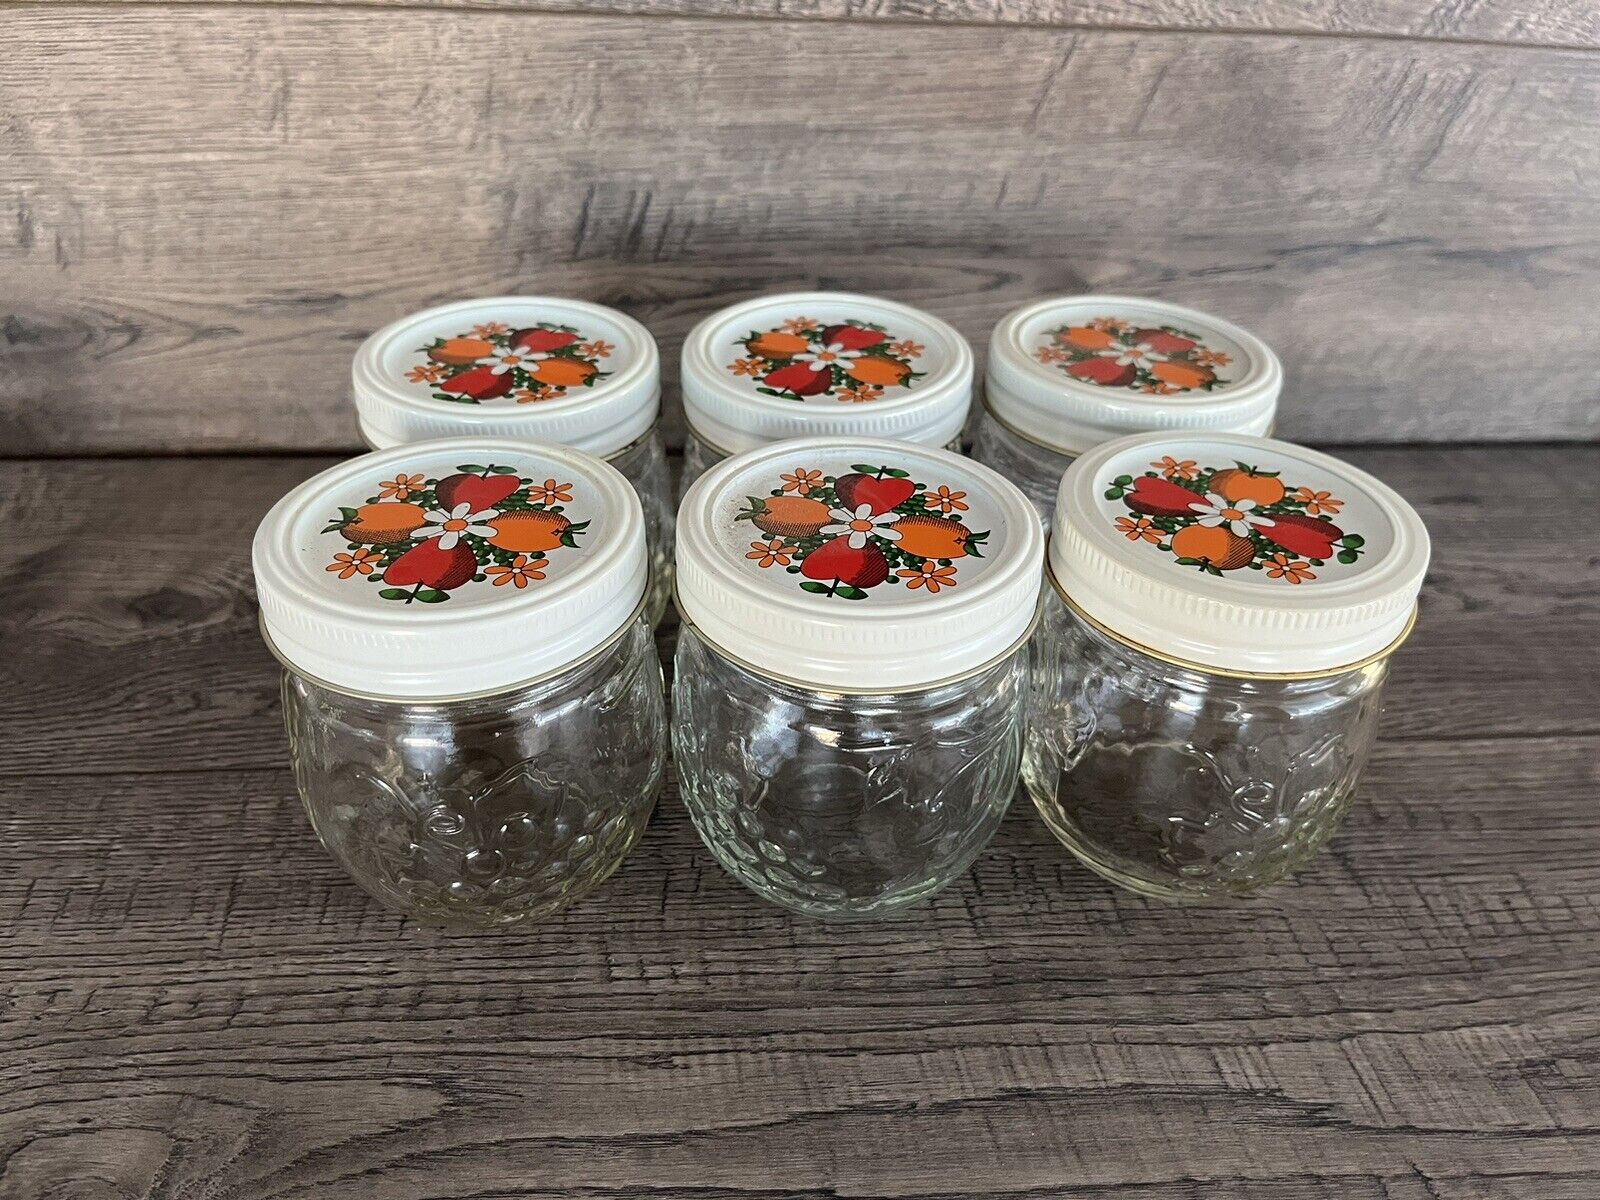 6 Vtg Kerr Fruit Decorated Jam & Jelly 8 oz Canning Jars 70610-00105 White Lids